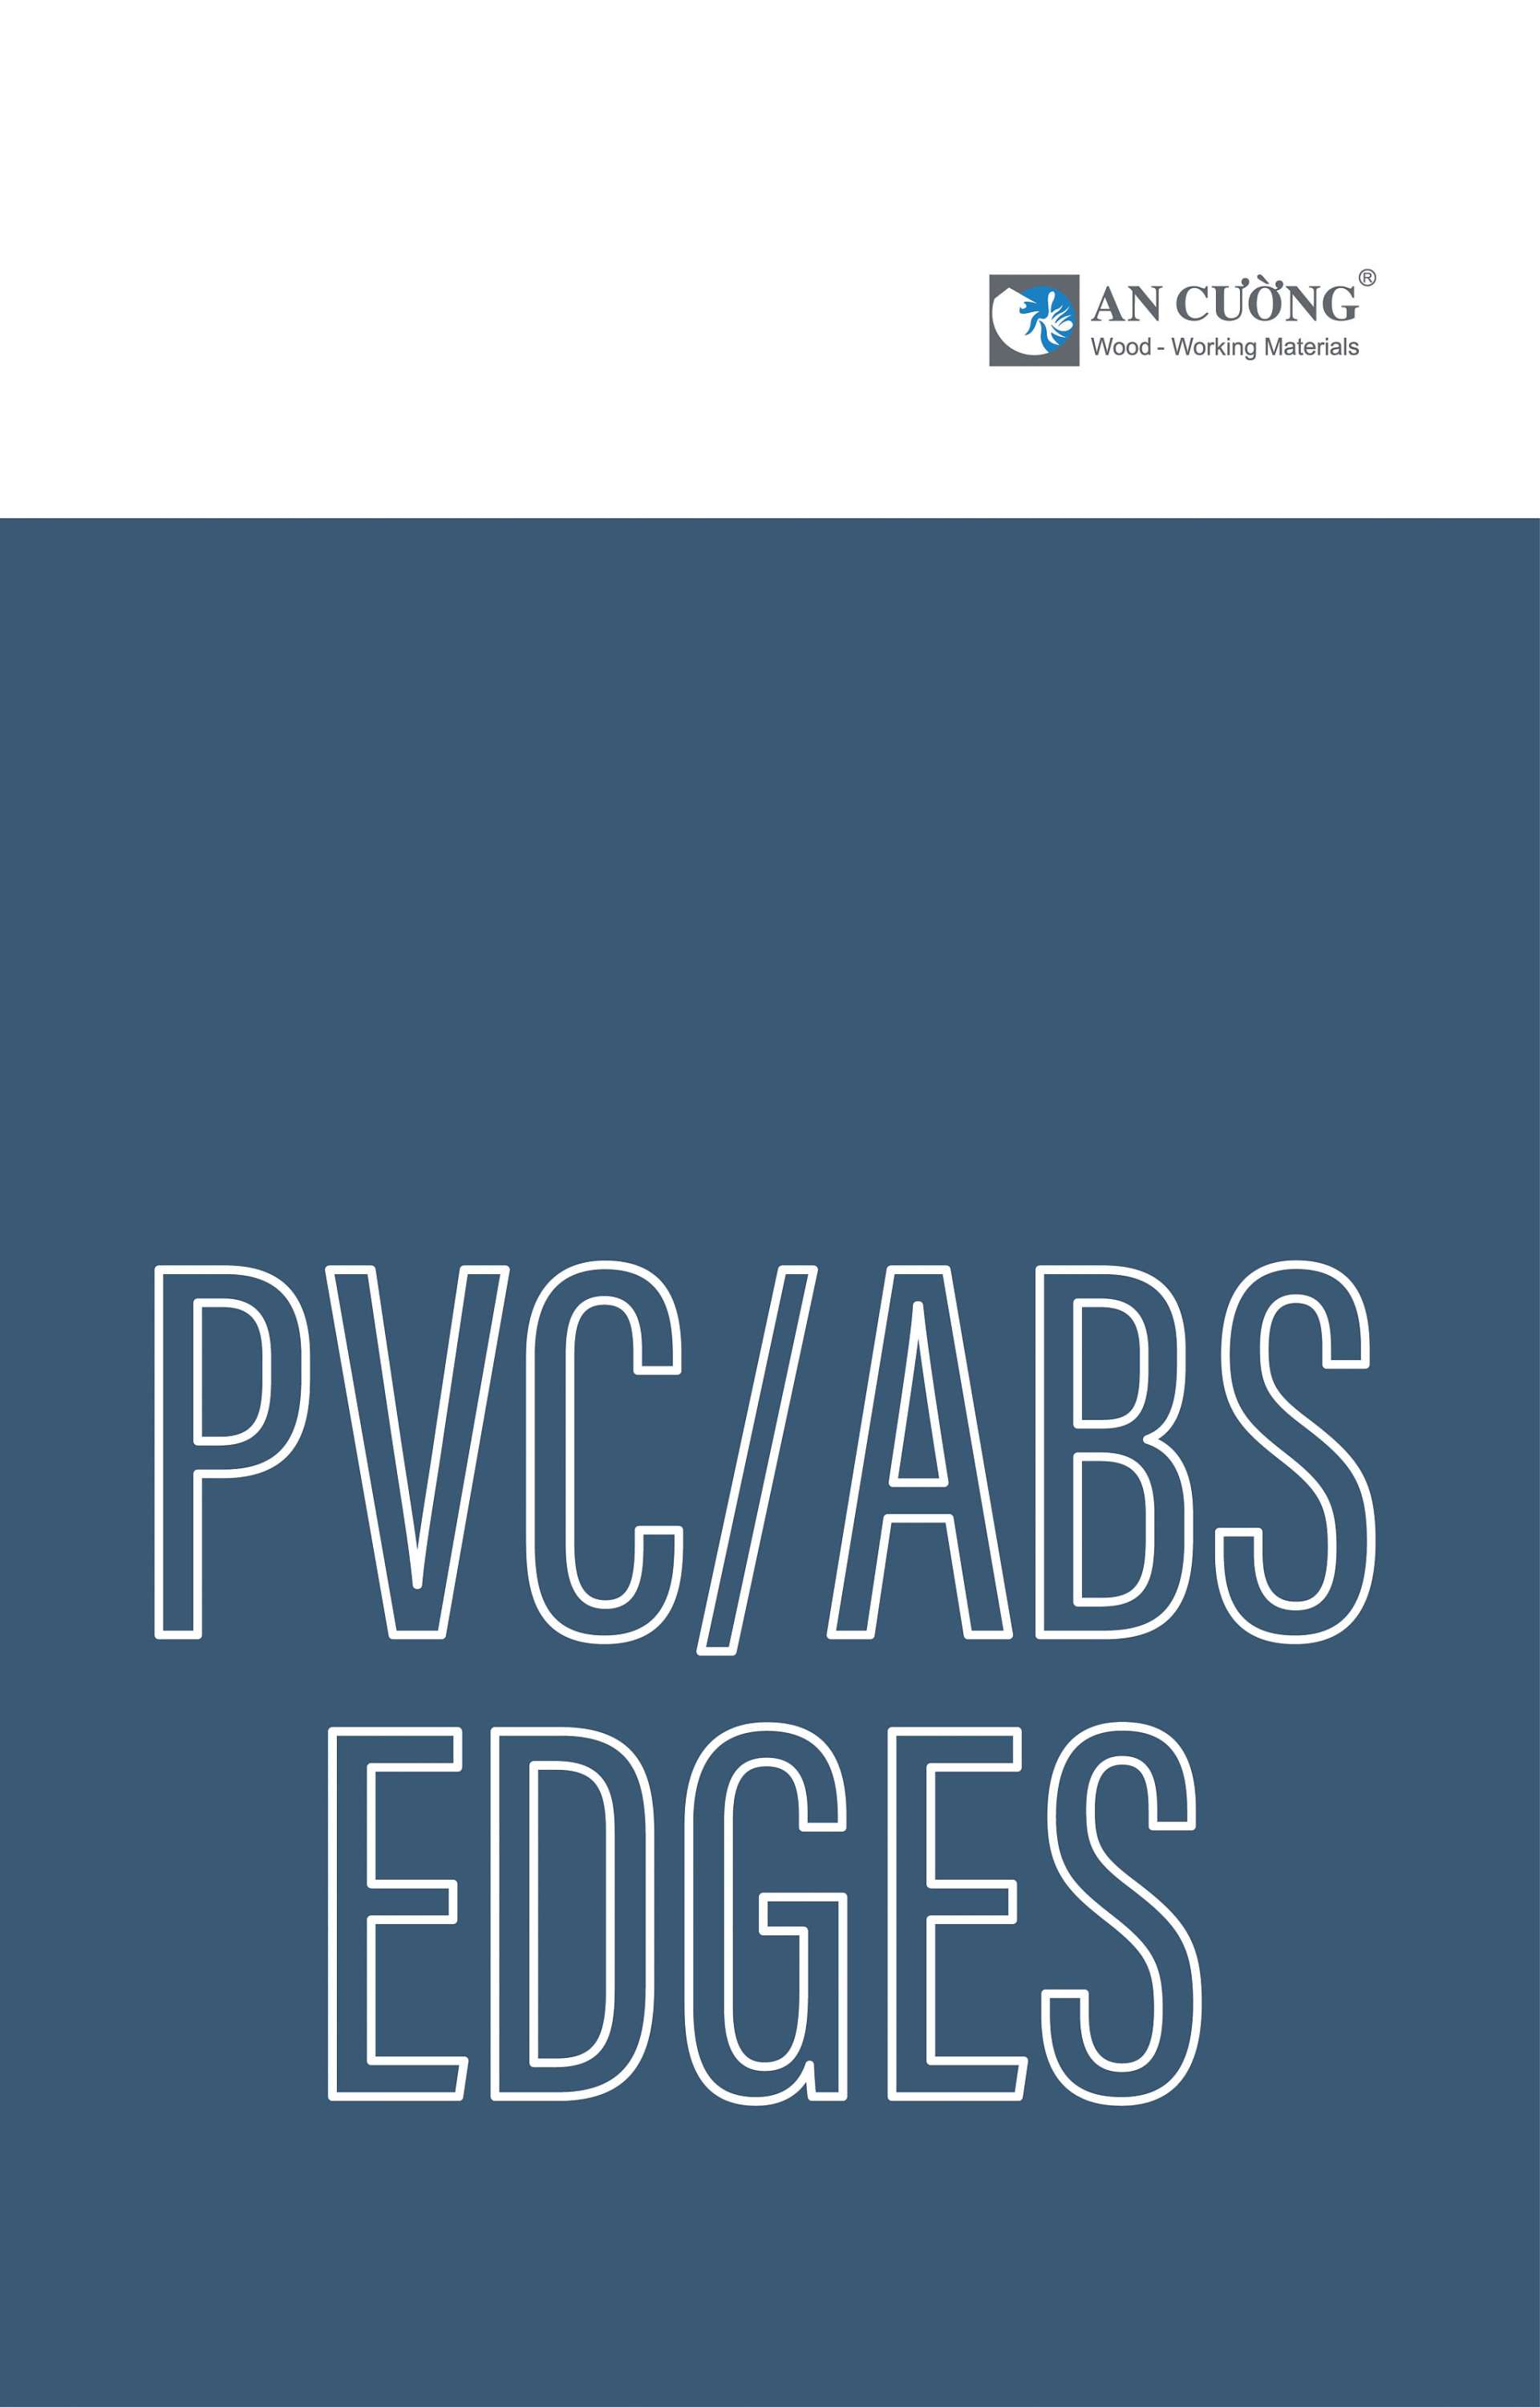 PVC / ABS EDGES